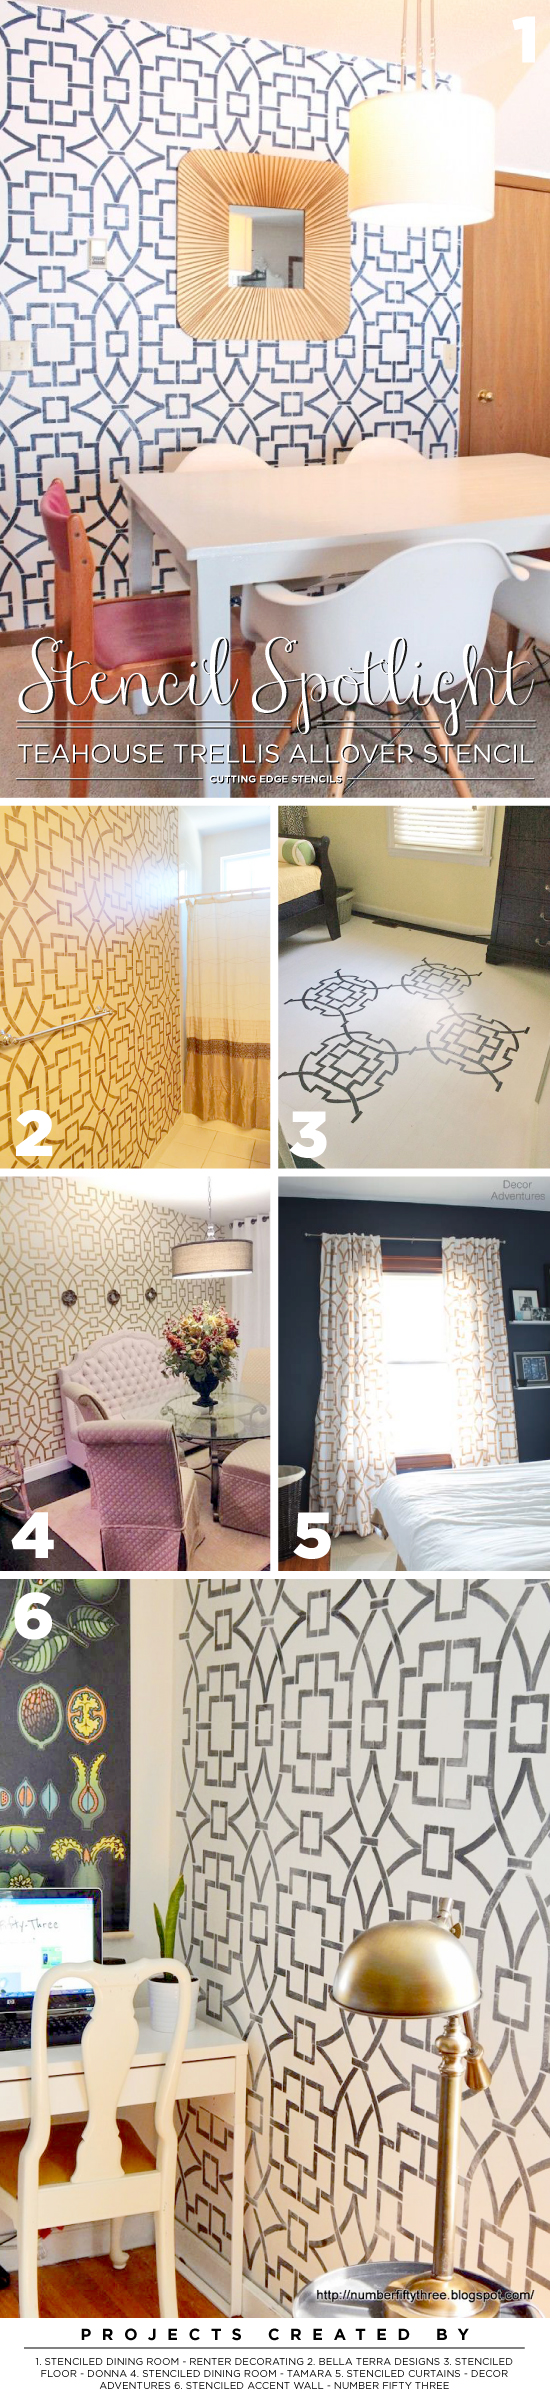 Cutting Edge Stencils shares DIY room ideas featuring the Tea House Trellis Allover wall pattern. http://www.cuttingedgestencils.com/tea-house-trellis-allover-stencil-pattern.html